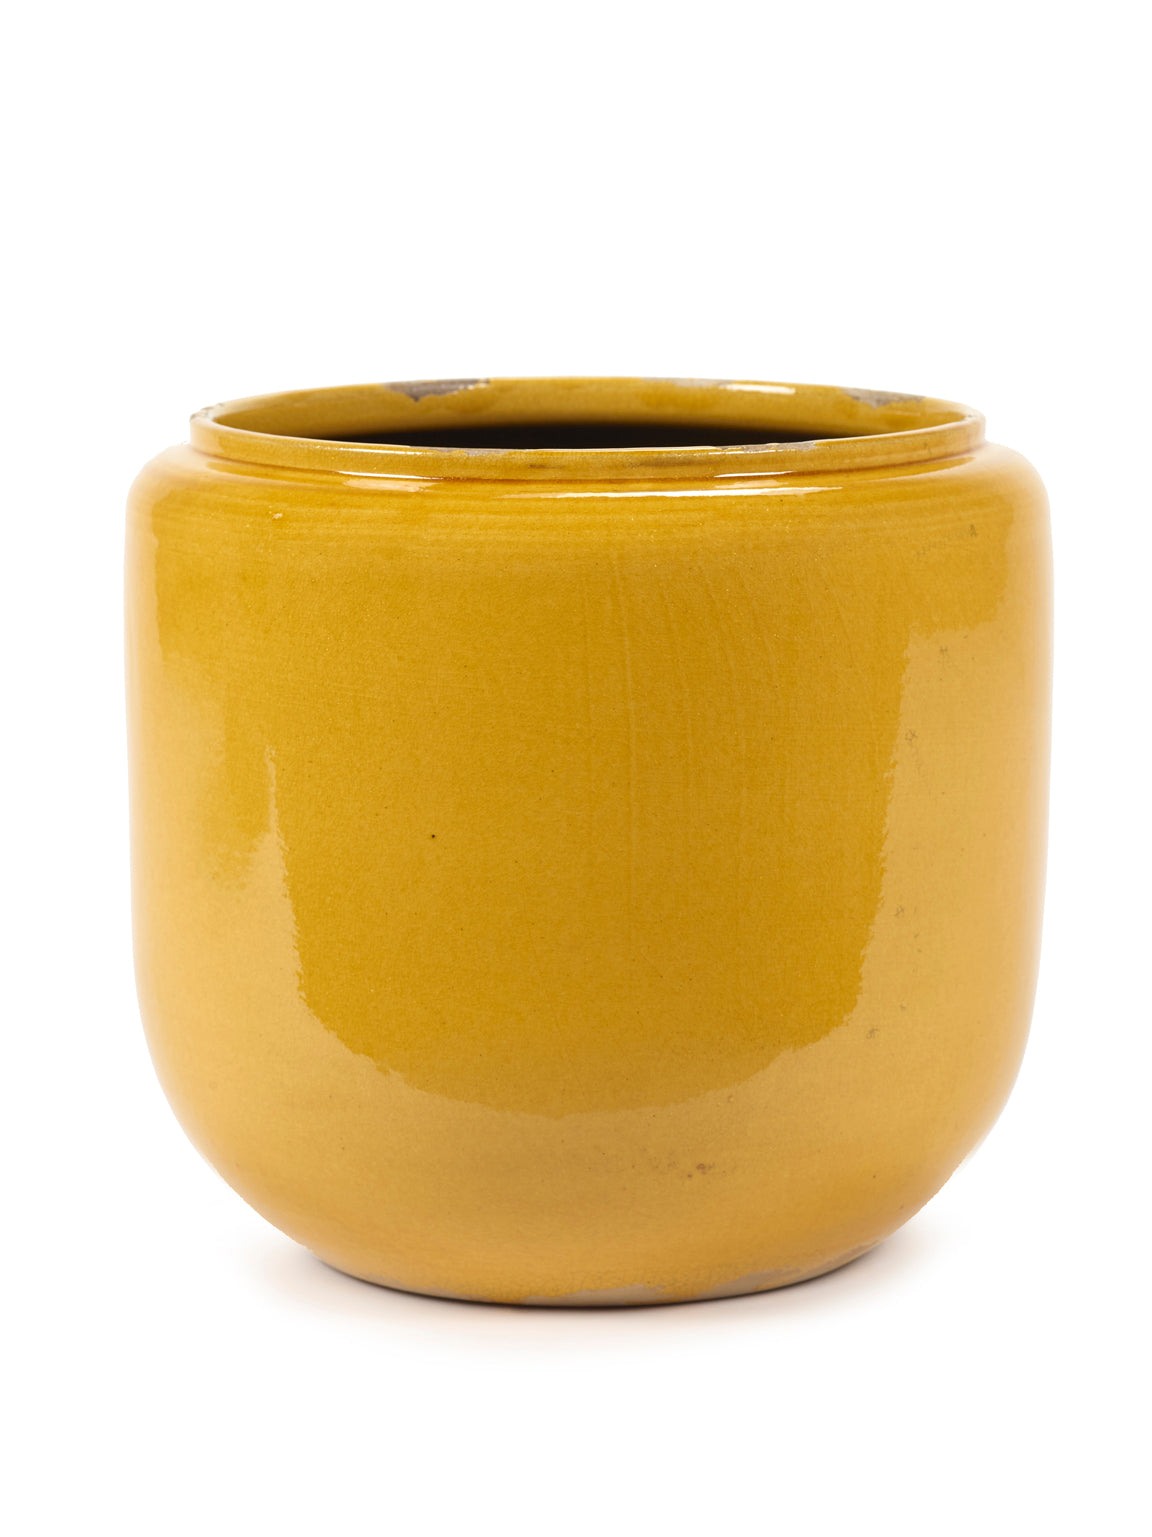 Honey Glazed Ceramic Pot by Serax